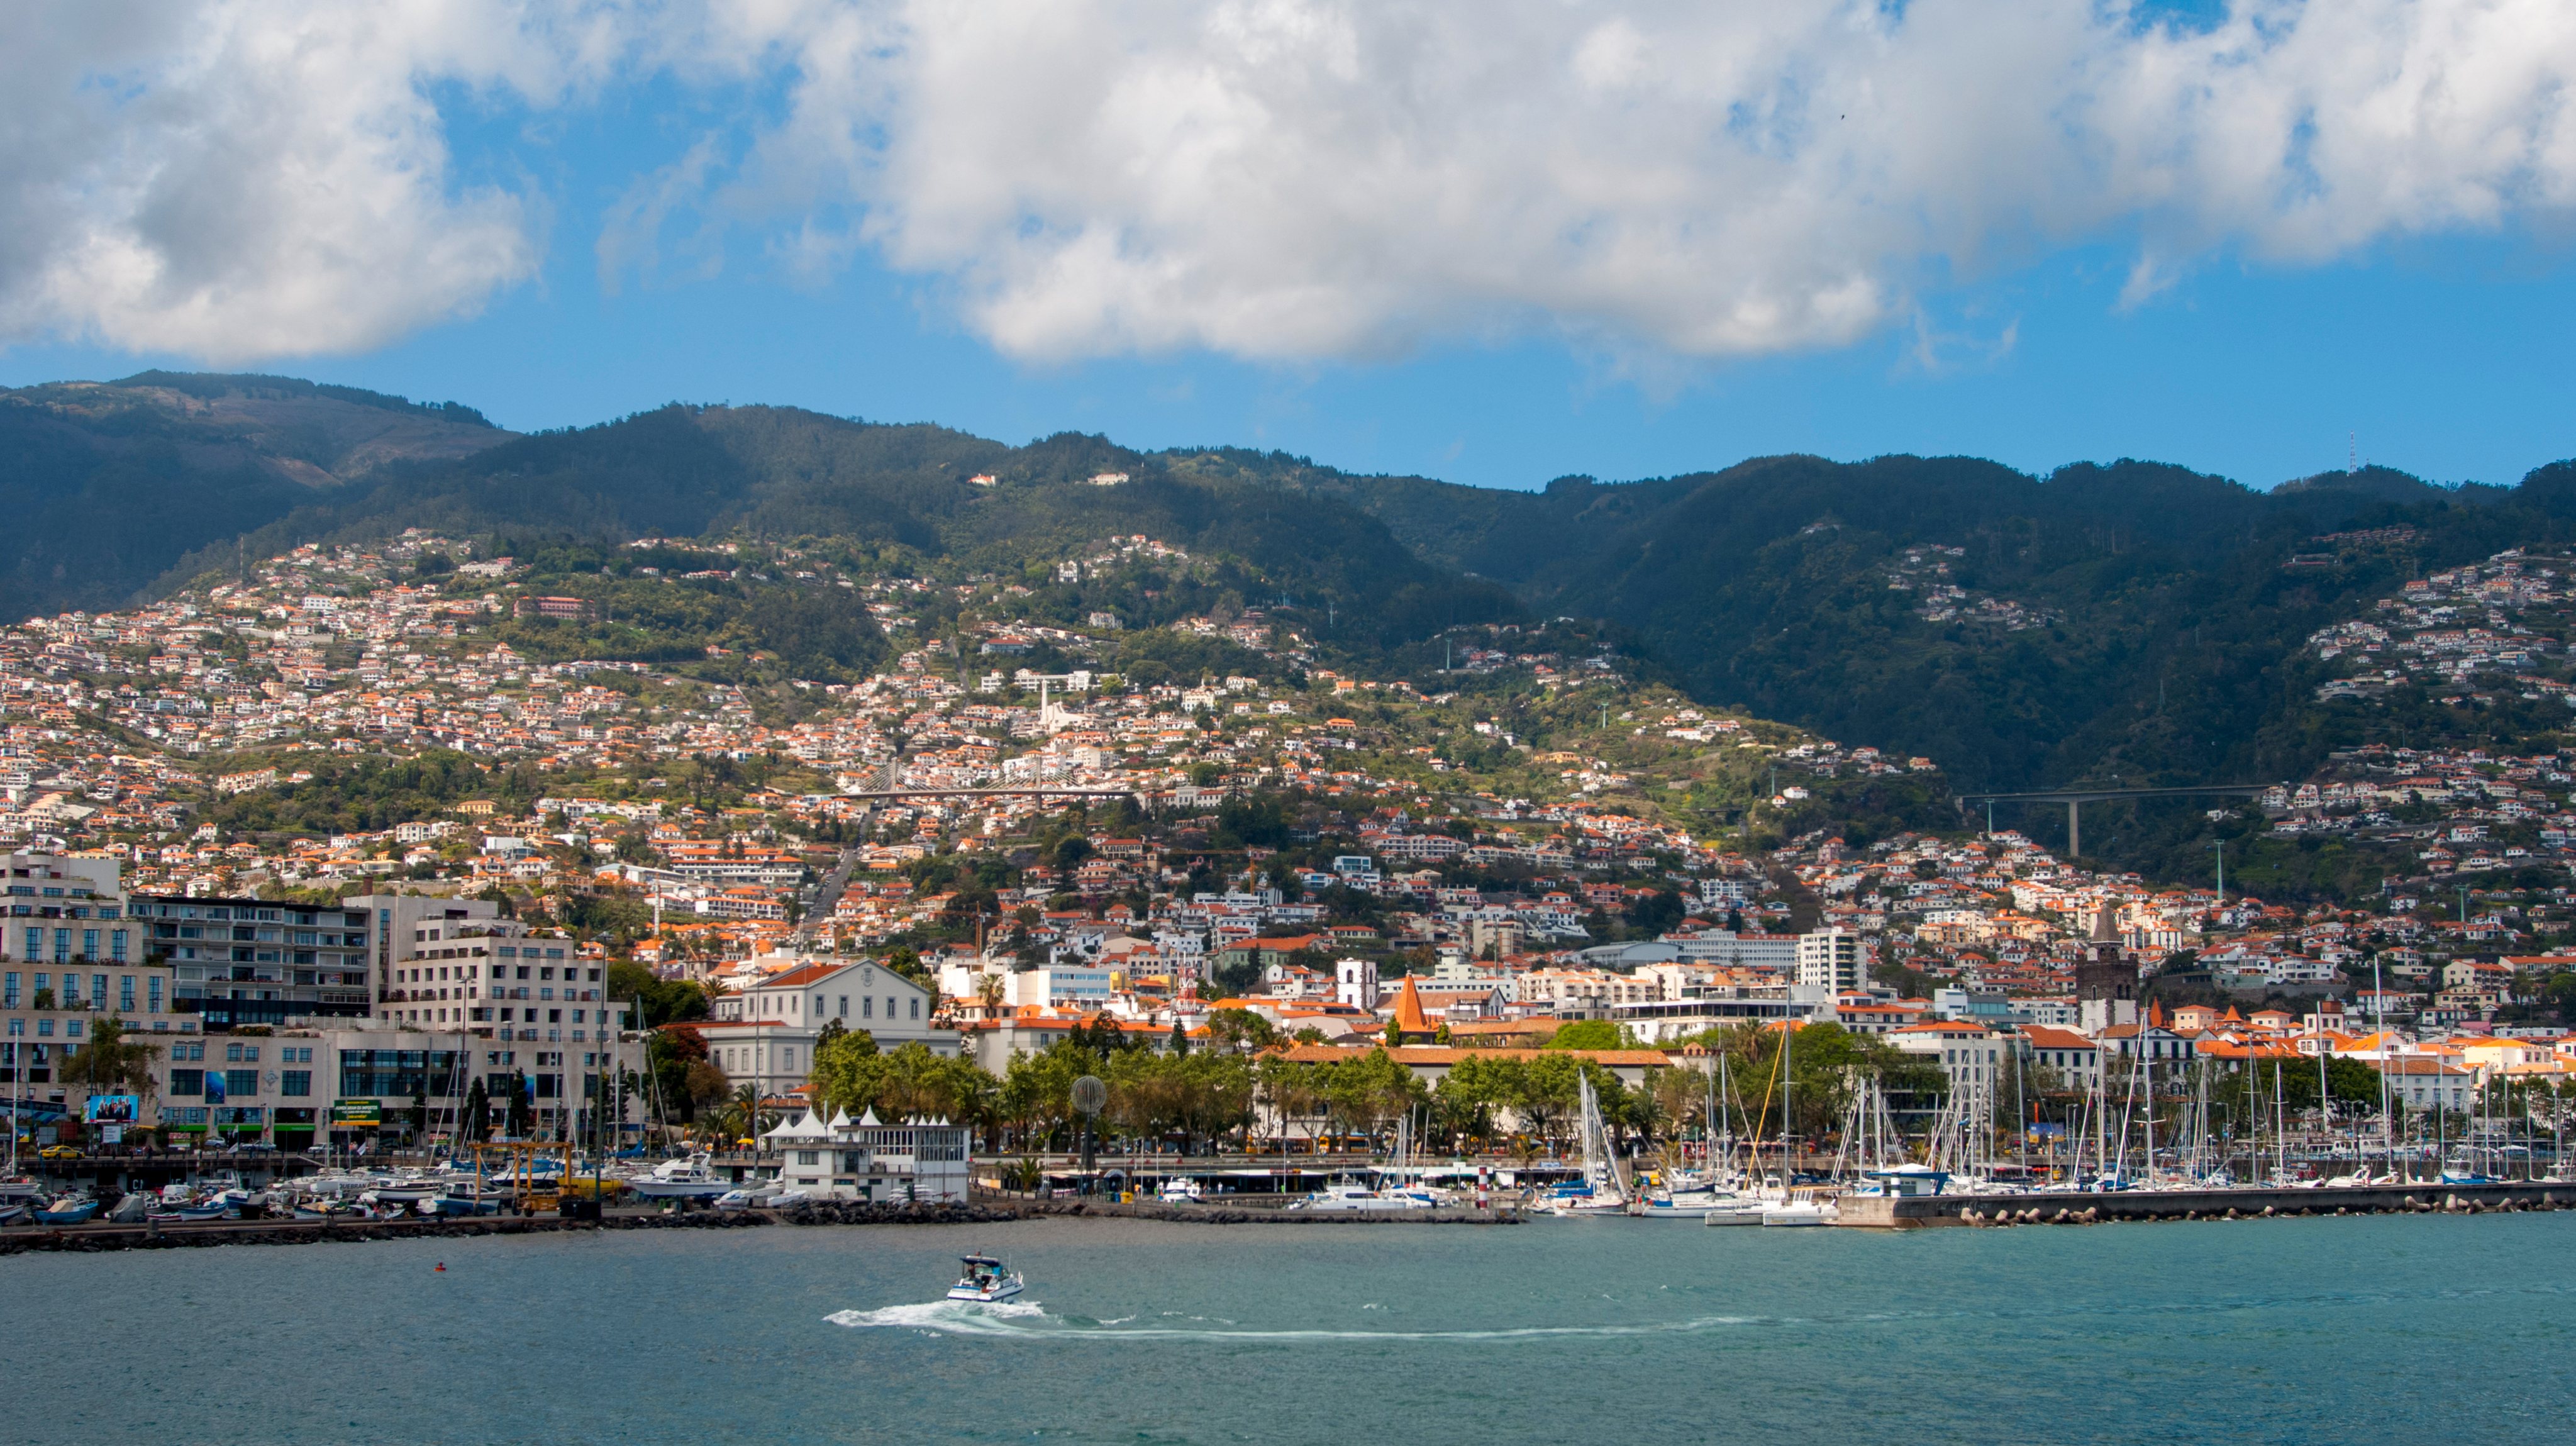 Vista Costal da cidade do Funchal, Madeira